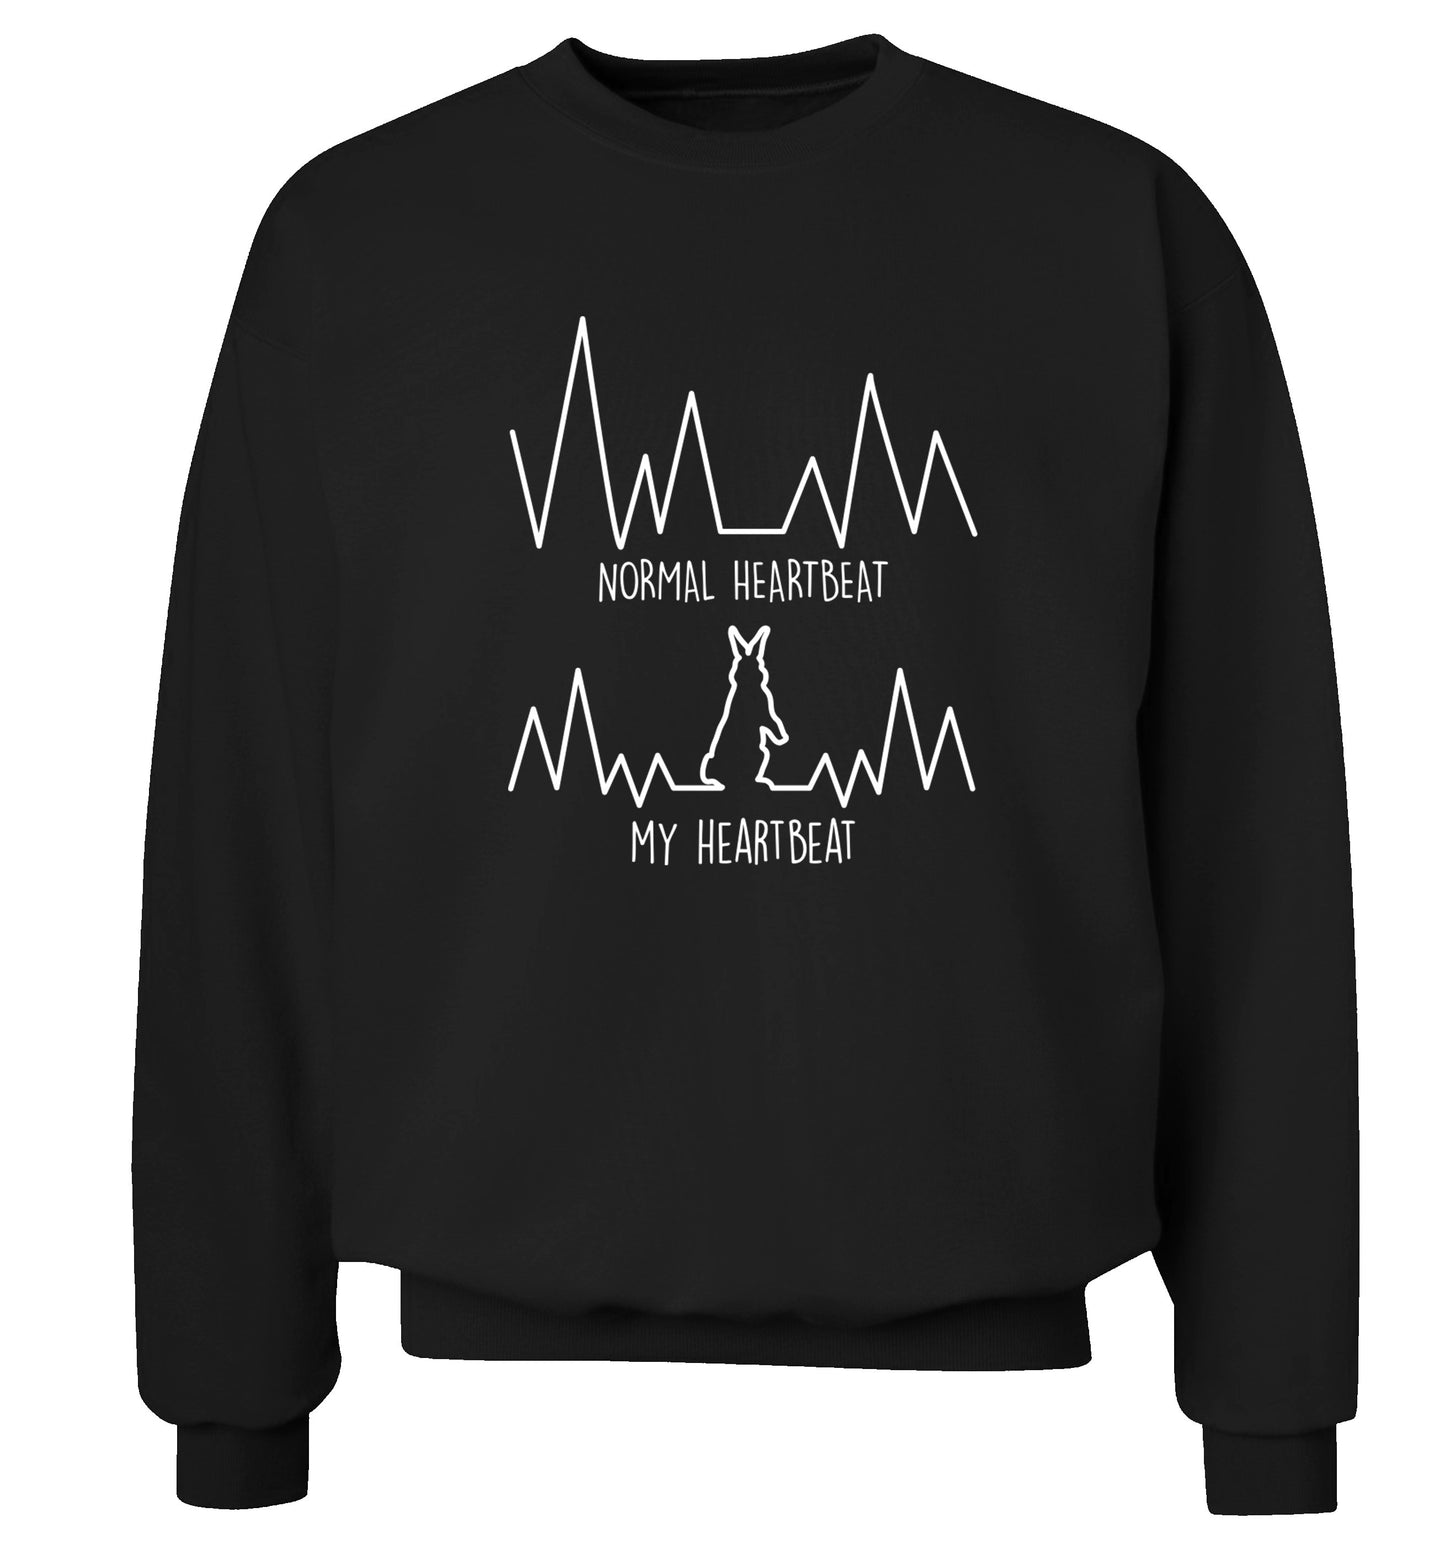 Normal heartbeat, my heartbeat rabbit lover Adult's unisex black  sweater 2XL